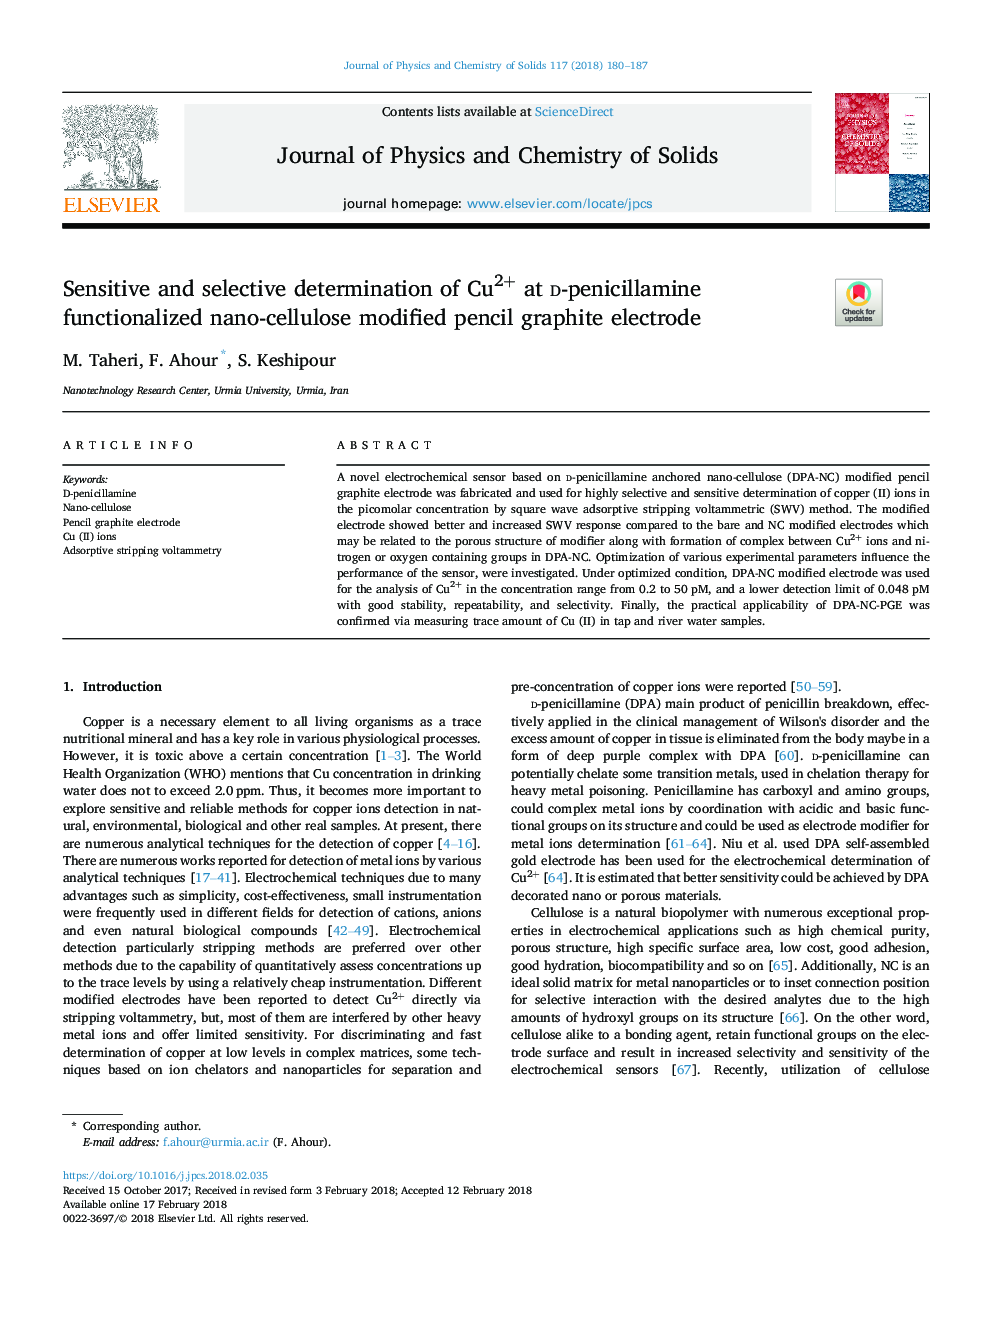 Sensitive and selective determination of Cu2+ at d-penicillamine functionalized nano-cellulose modified pencil graphite electrode